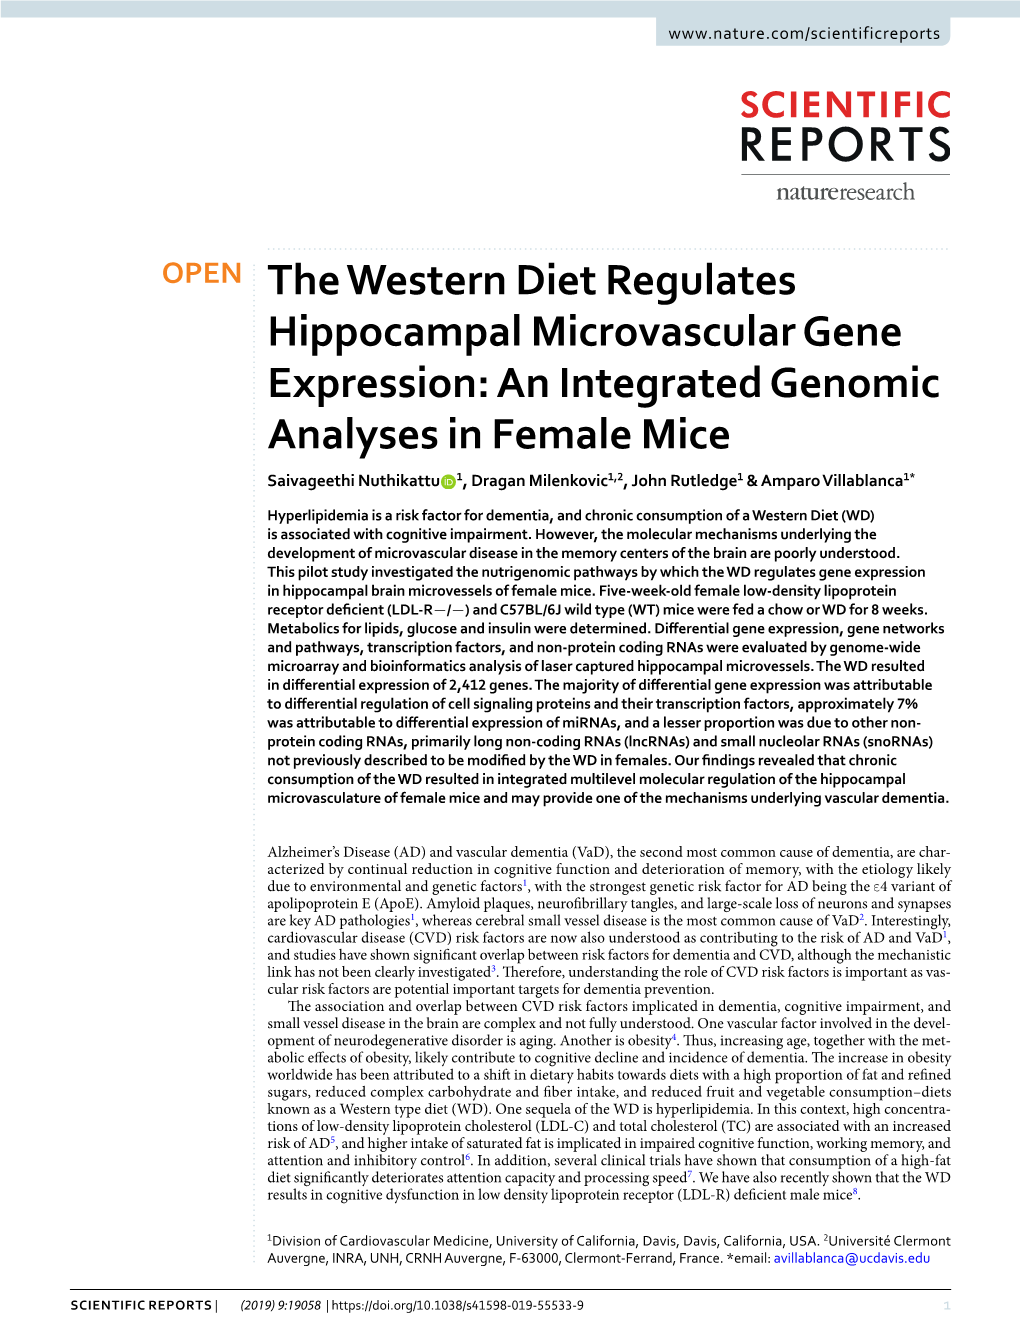 The Western Diet Regulates Hippocampal Microvascular Gene